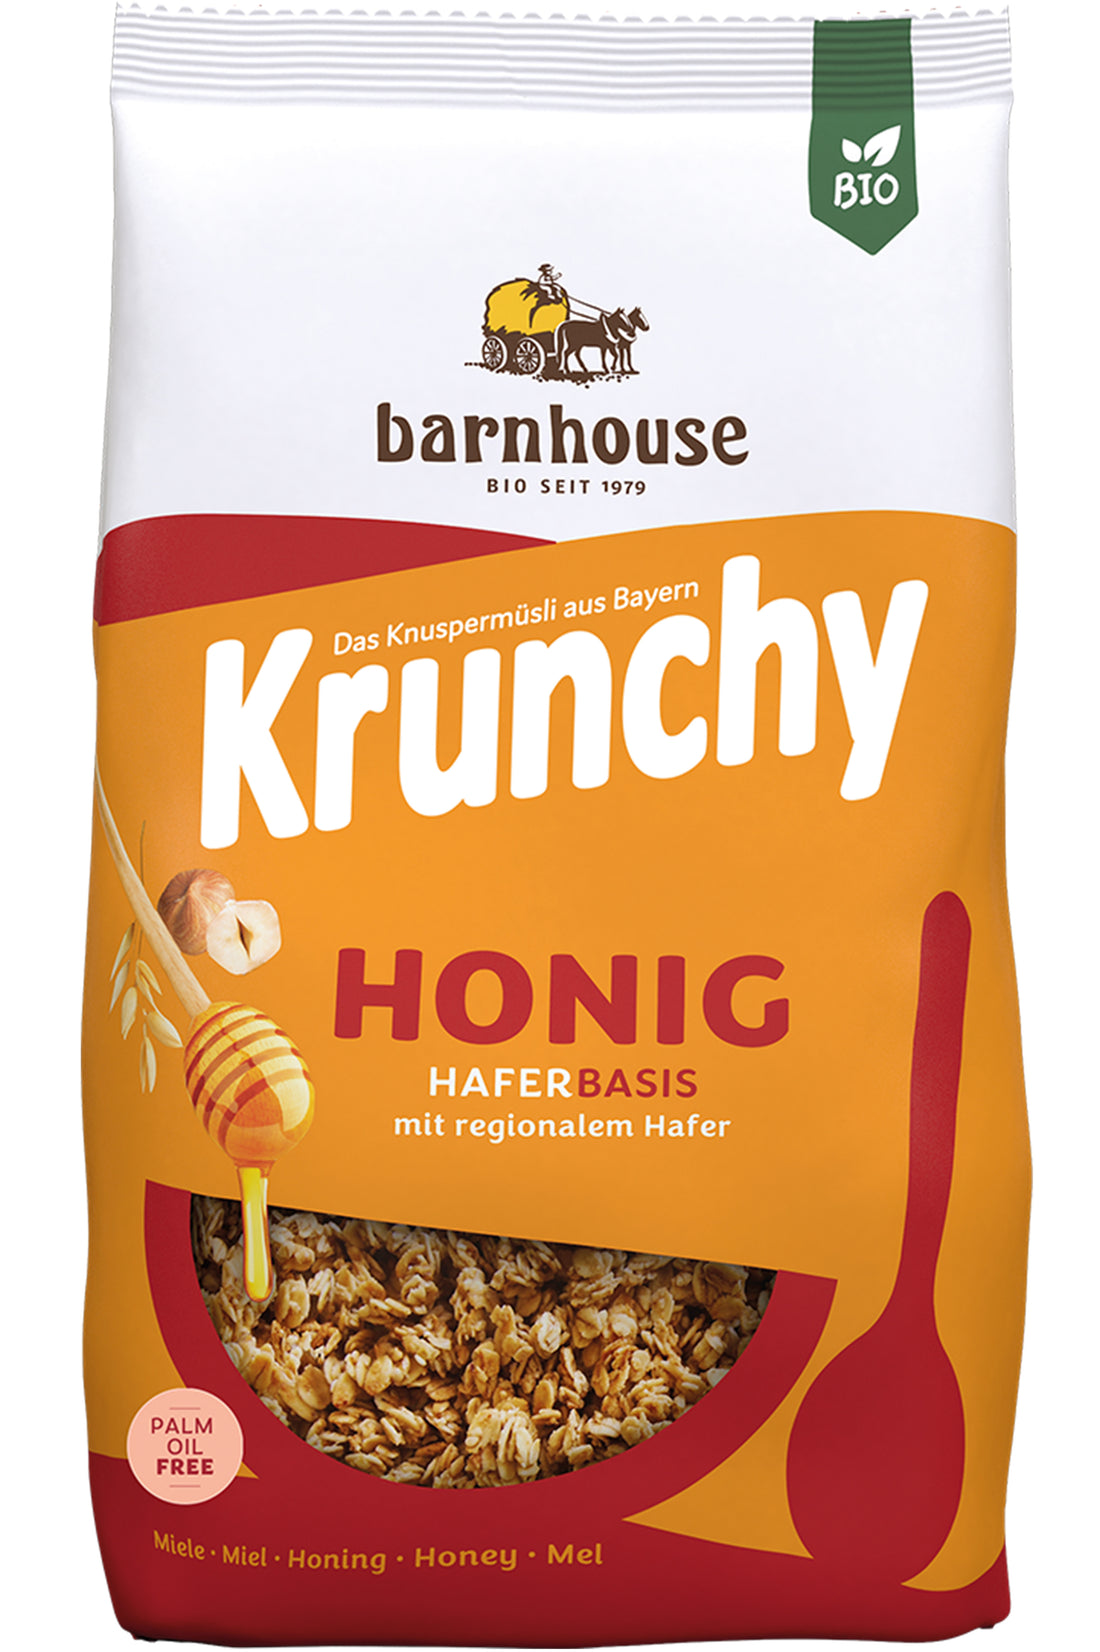 Krunchy Honey